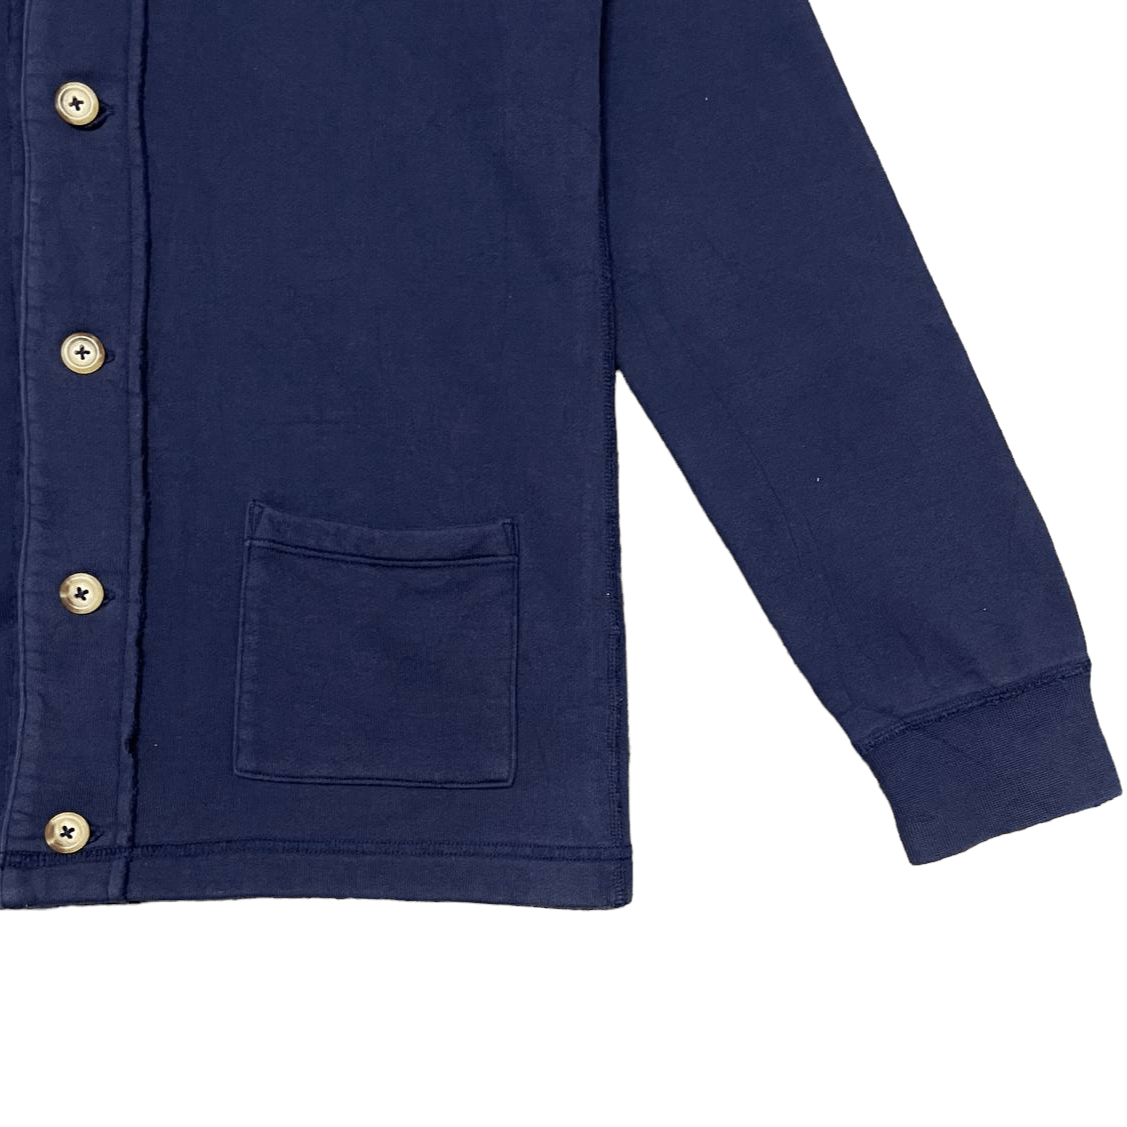 Vintage Polo Ralph Lauren Cardigan Jacket - 4